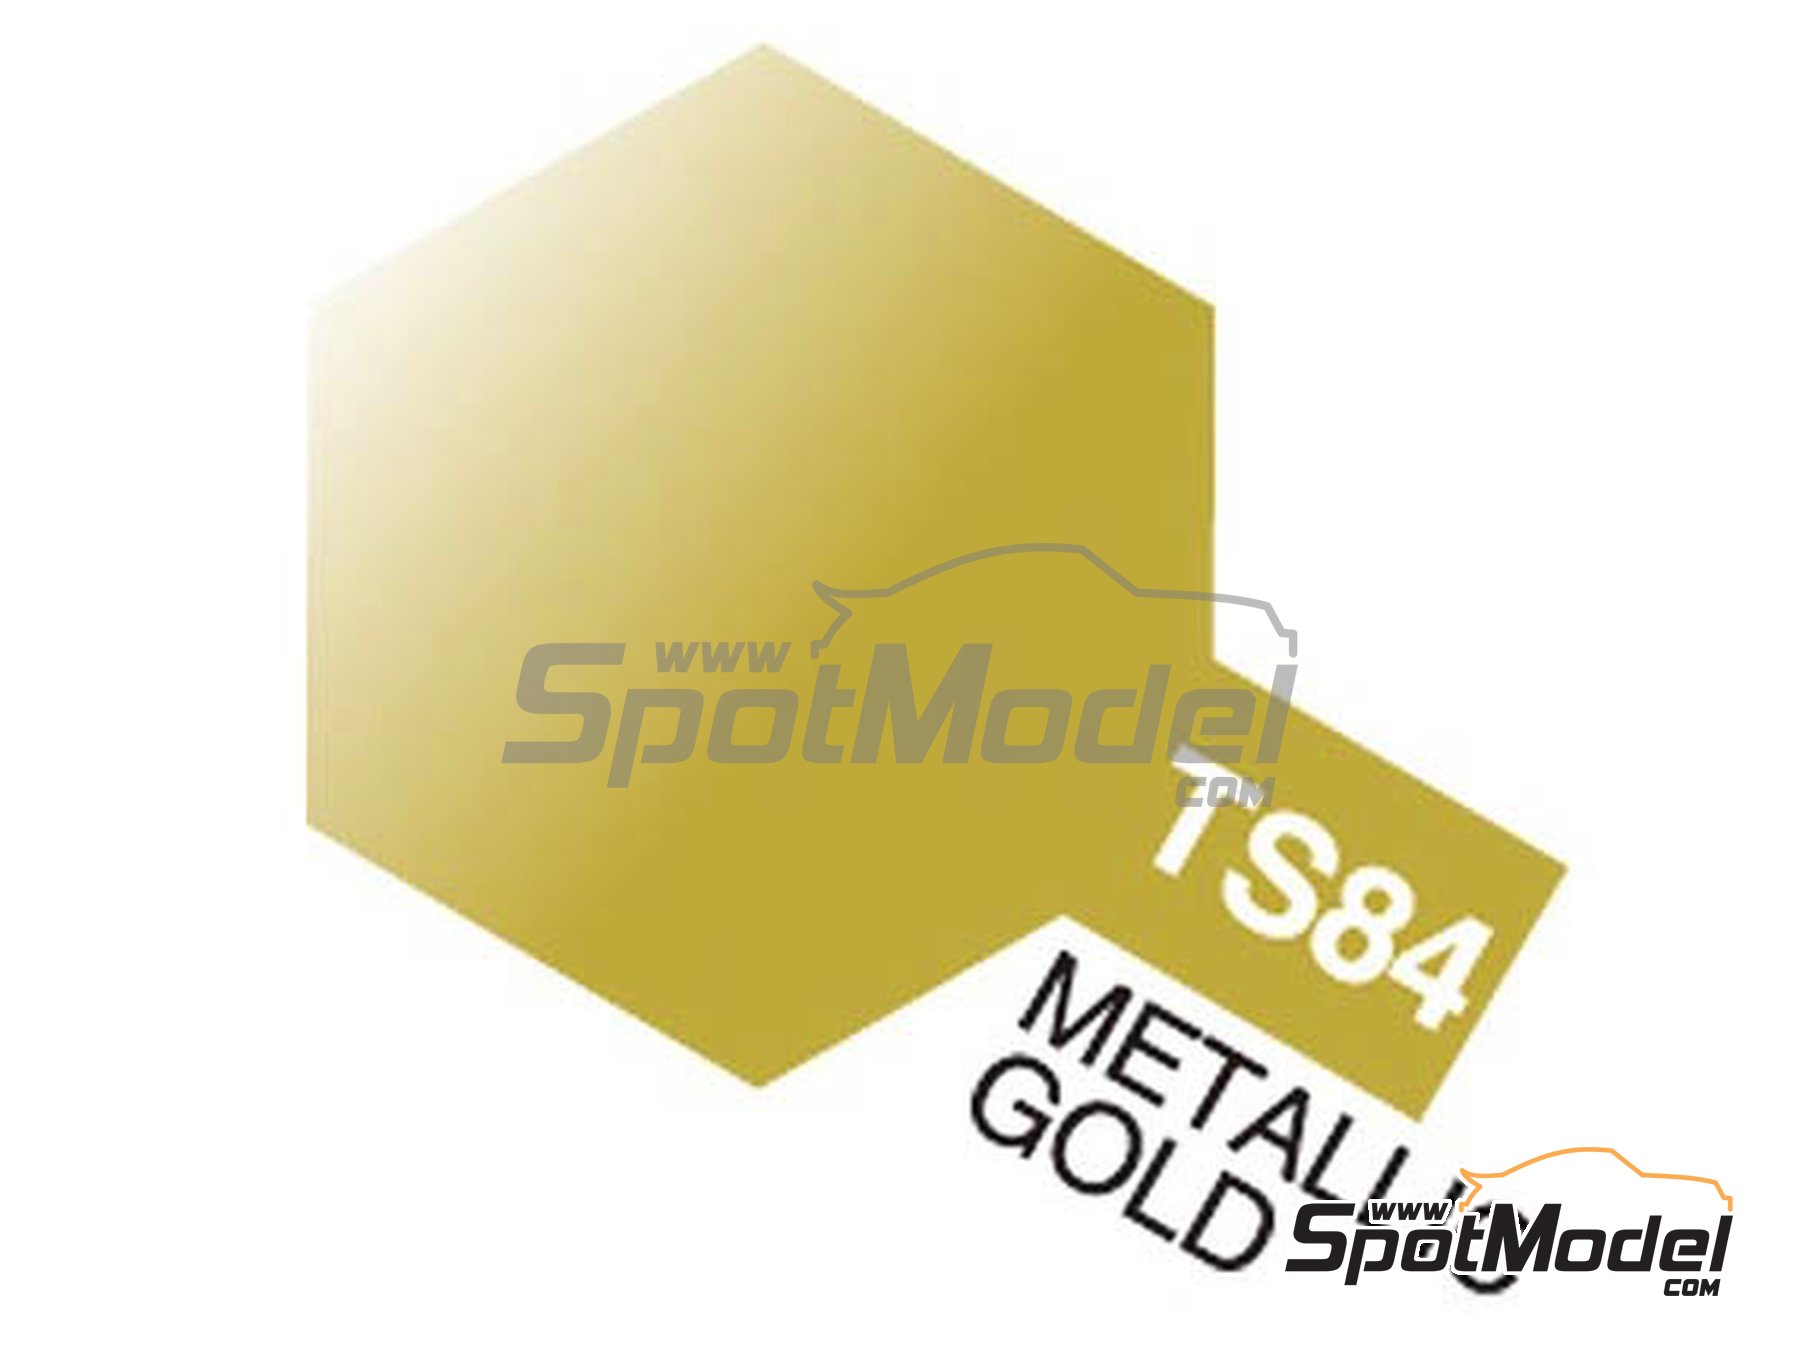 Tamiya 85084 TS-84 Metallic Gold Spray Paint / Tamiya USA